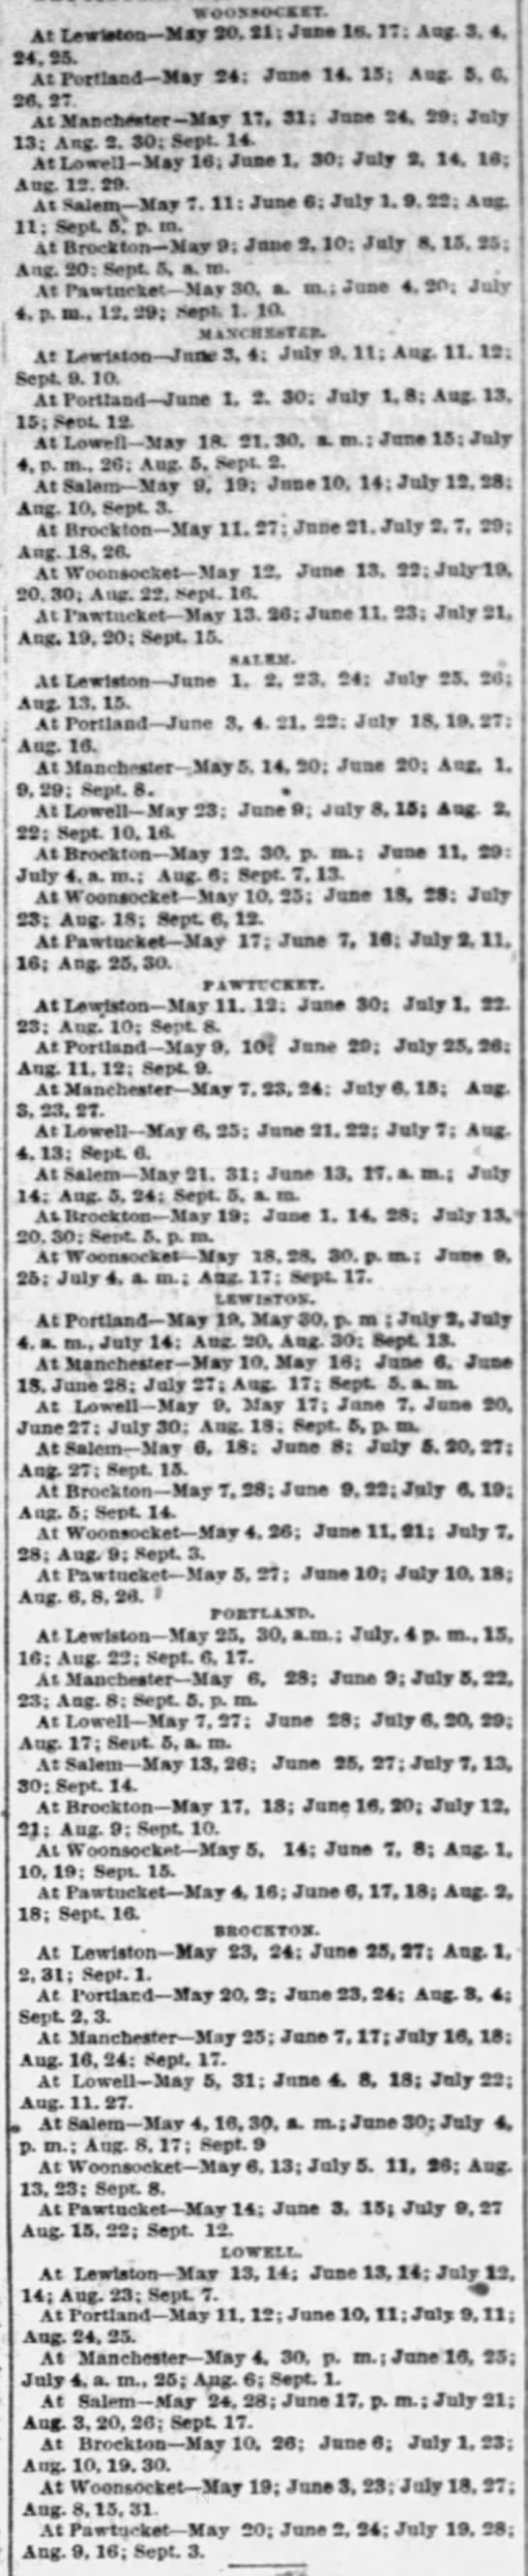 1892 New England League schedule - 